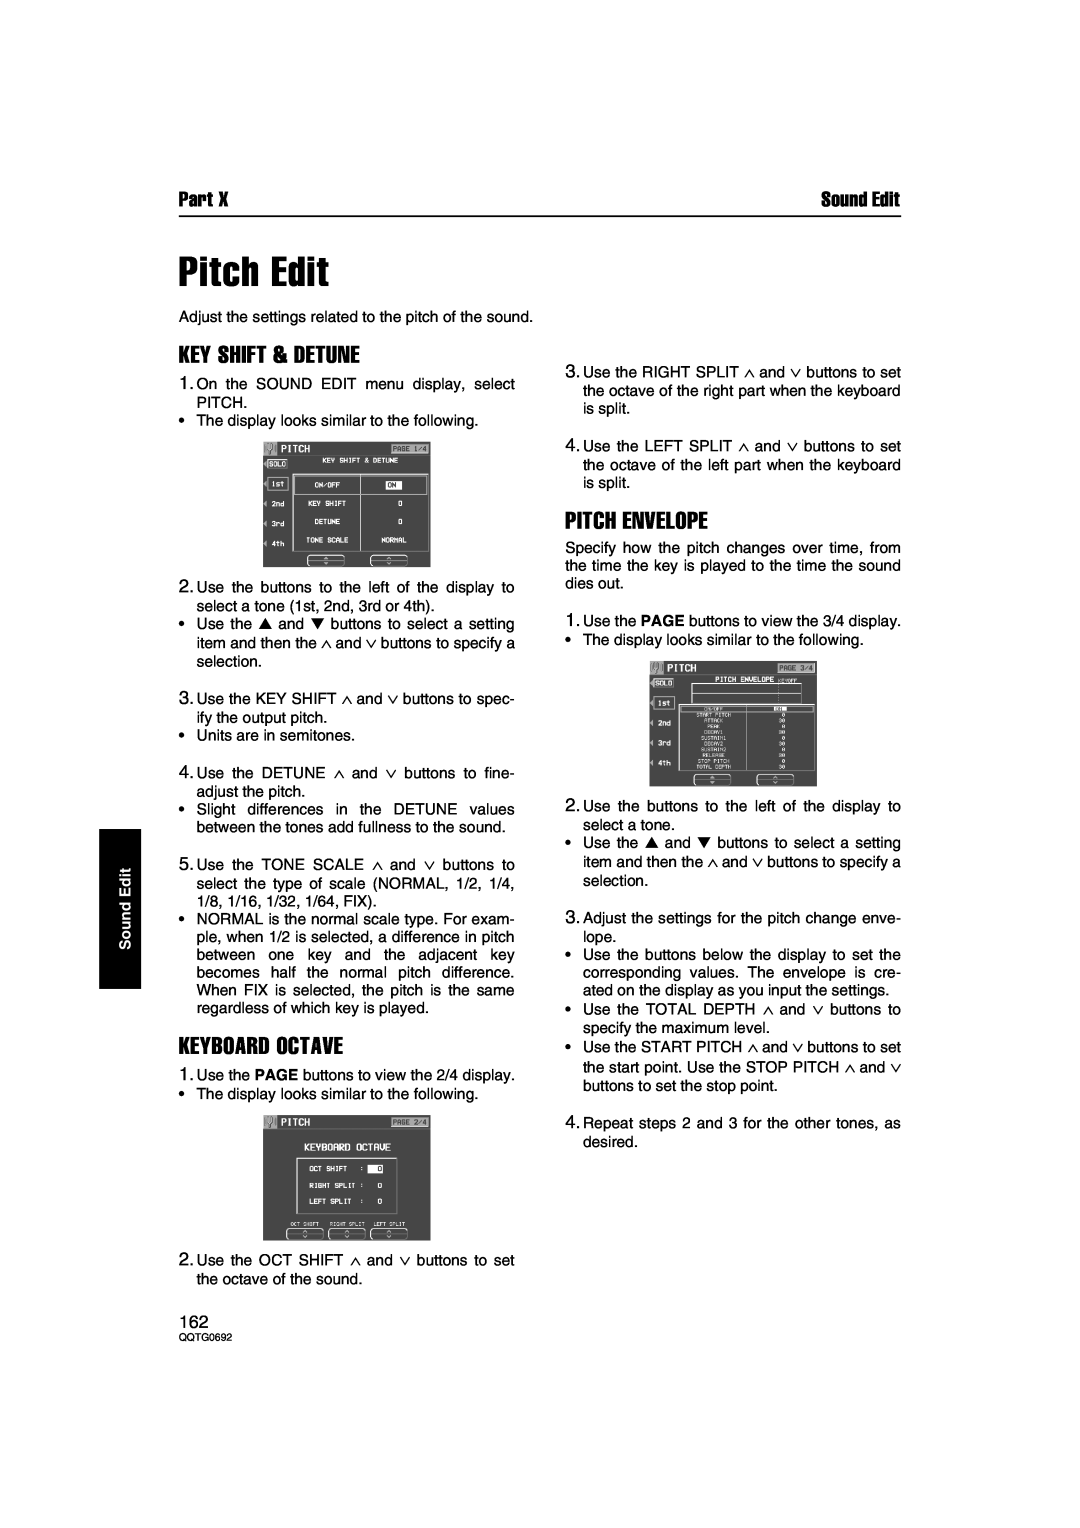 Panasonic SX-KN2600, SX-KN2400 manual Pitch Edit, Key Shift & Detune, Keyboard Octave, Pitch Envelope, Part, Sound Edit 